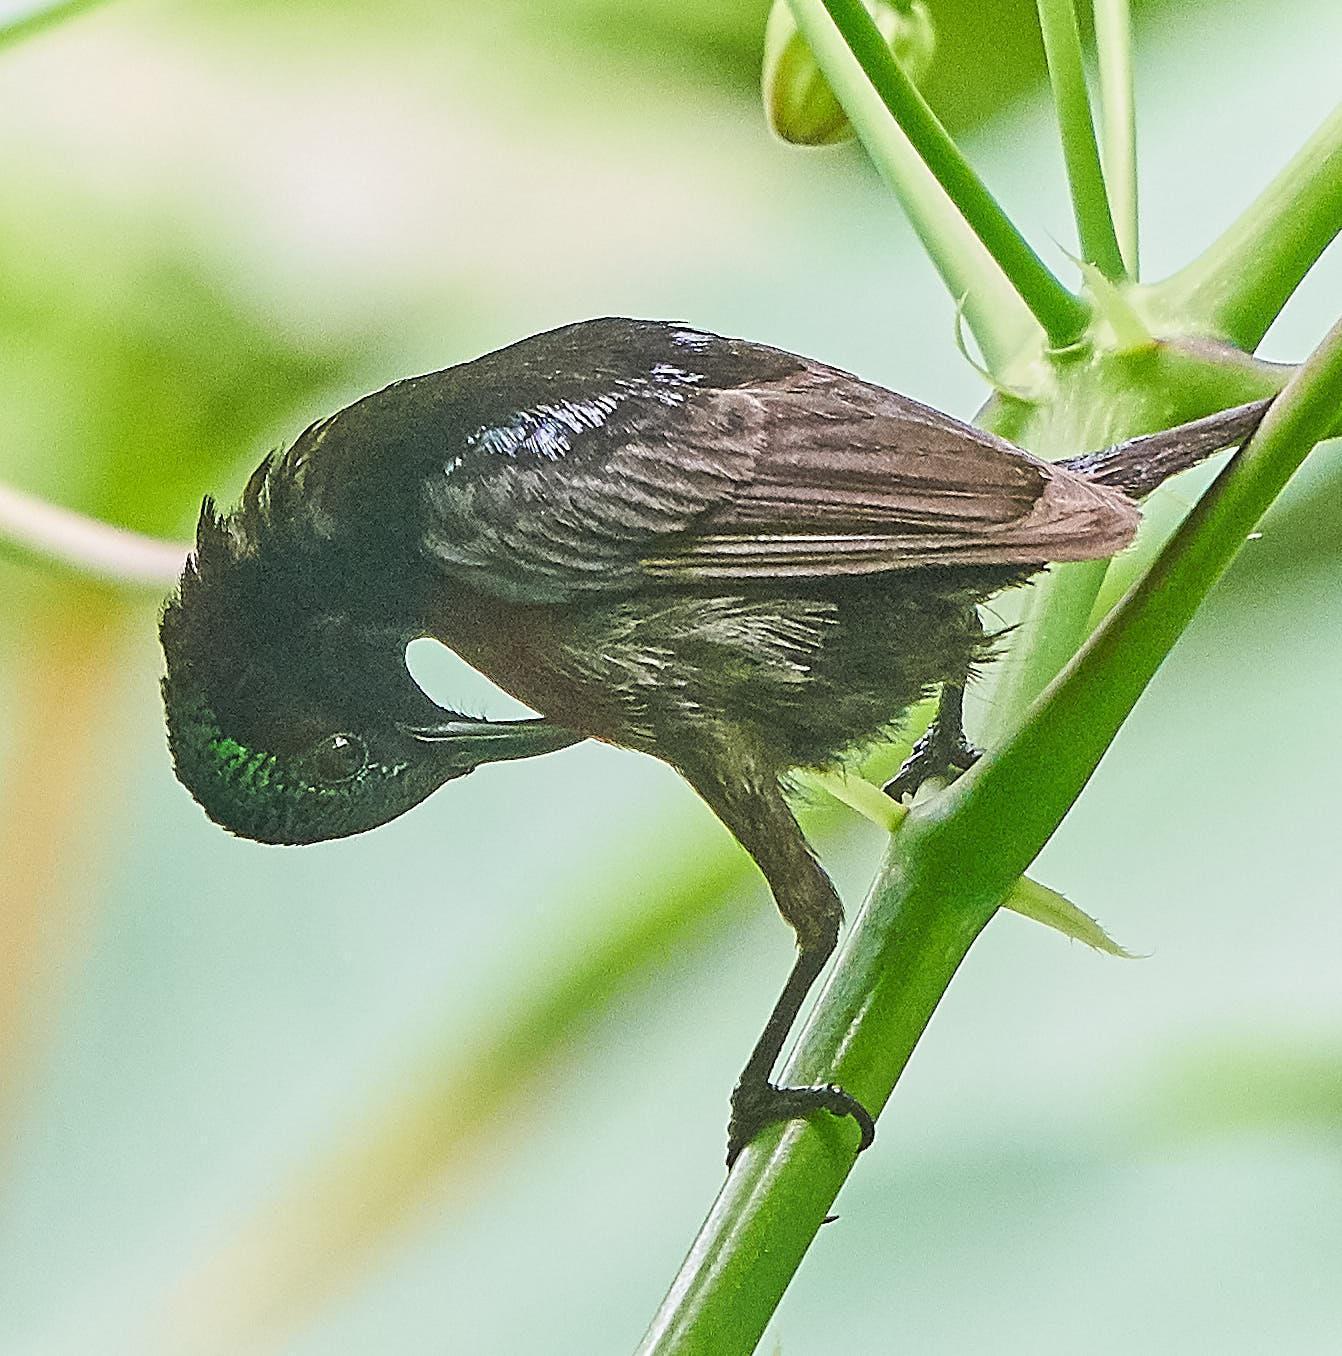 Van Hasselt's Sunbird Photo by Steven Cheong